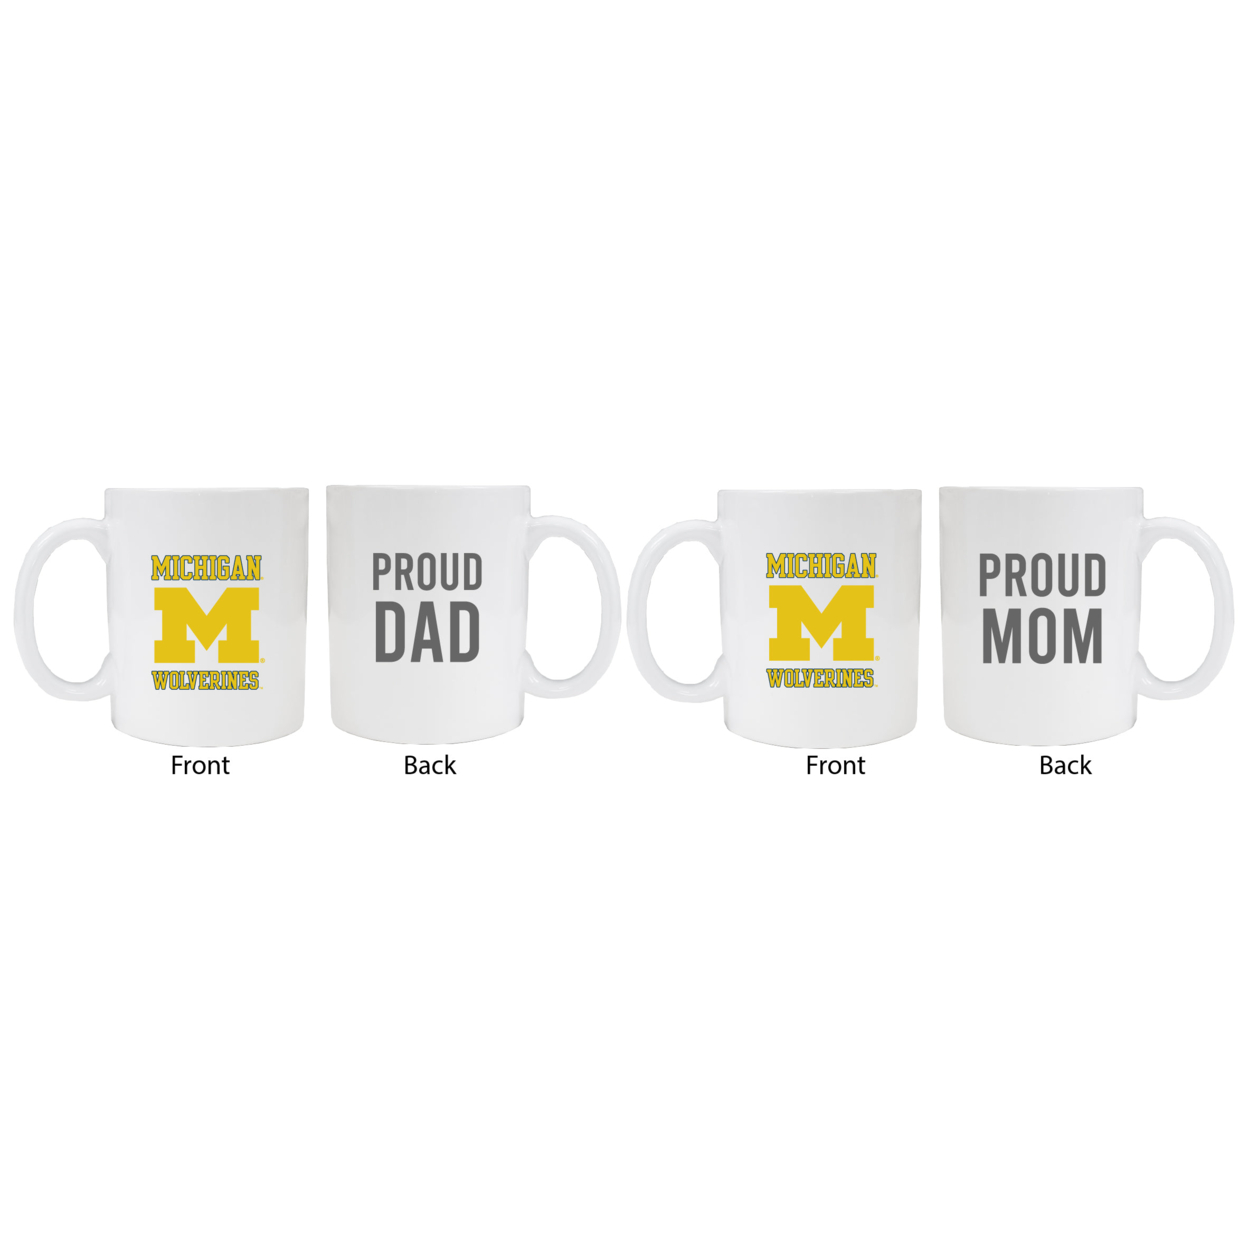 Michigan Wolverines Proud Mom And Dad White Ceramic Coffee Mug 2 Pack (White).